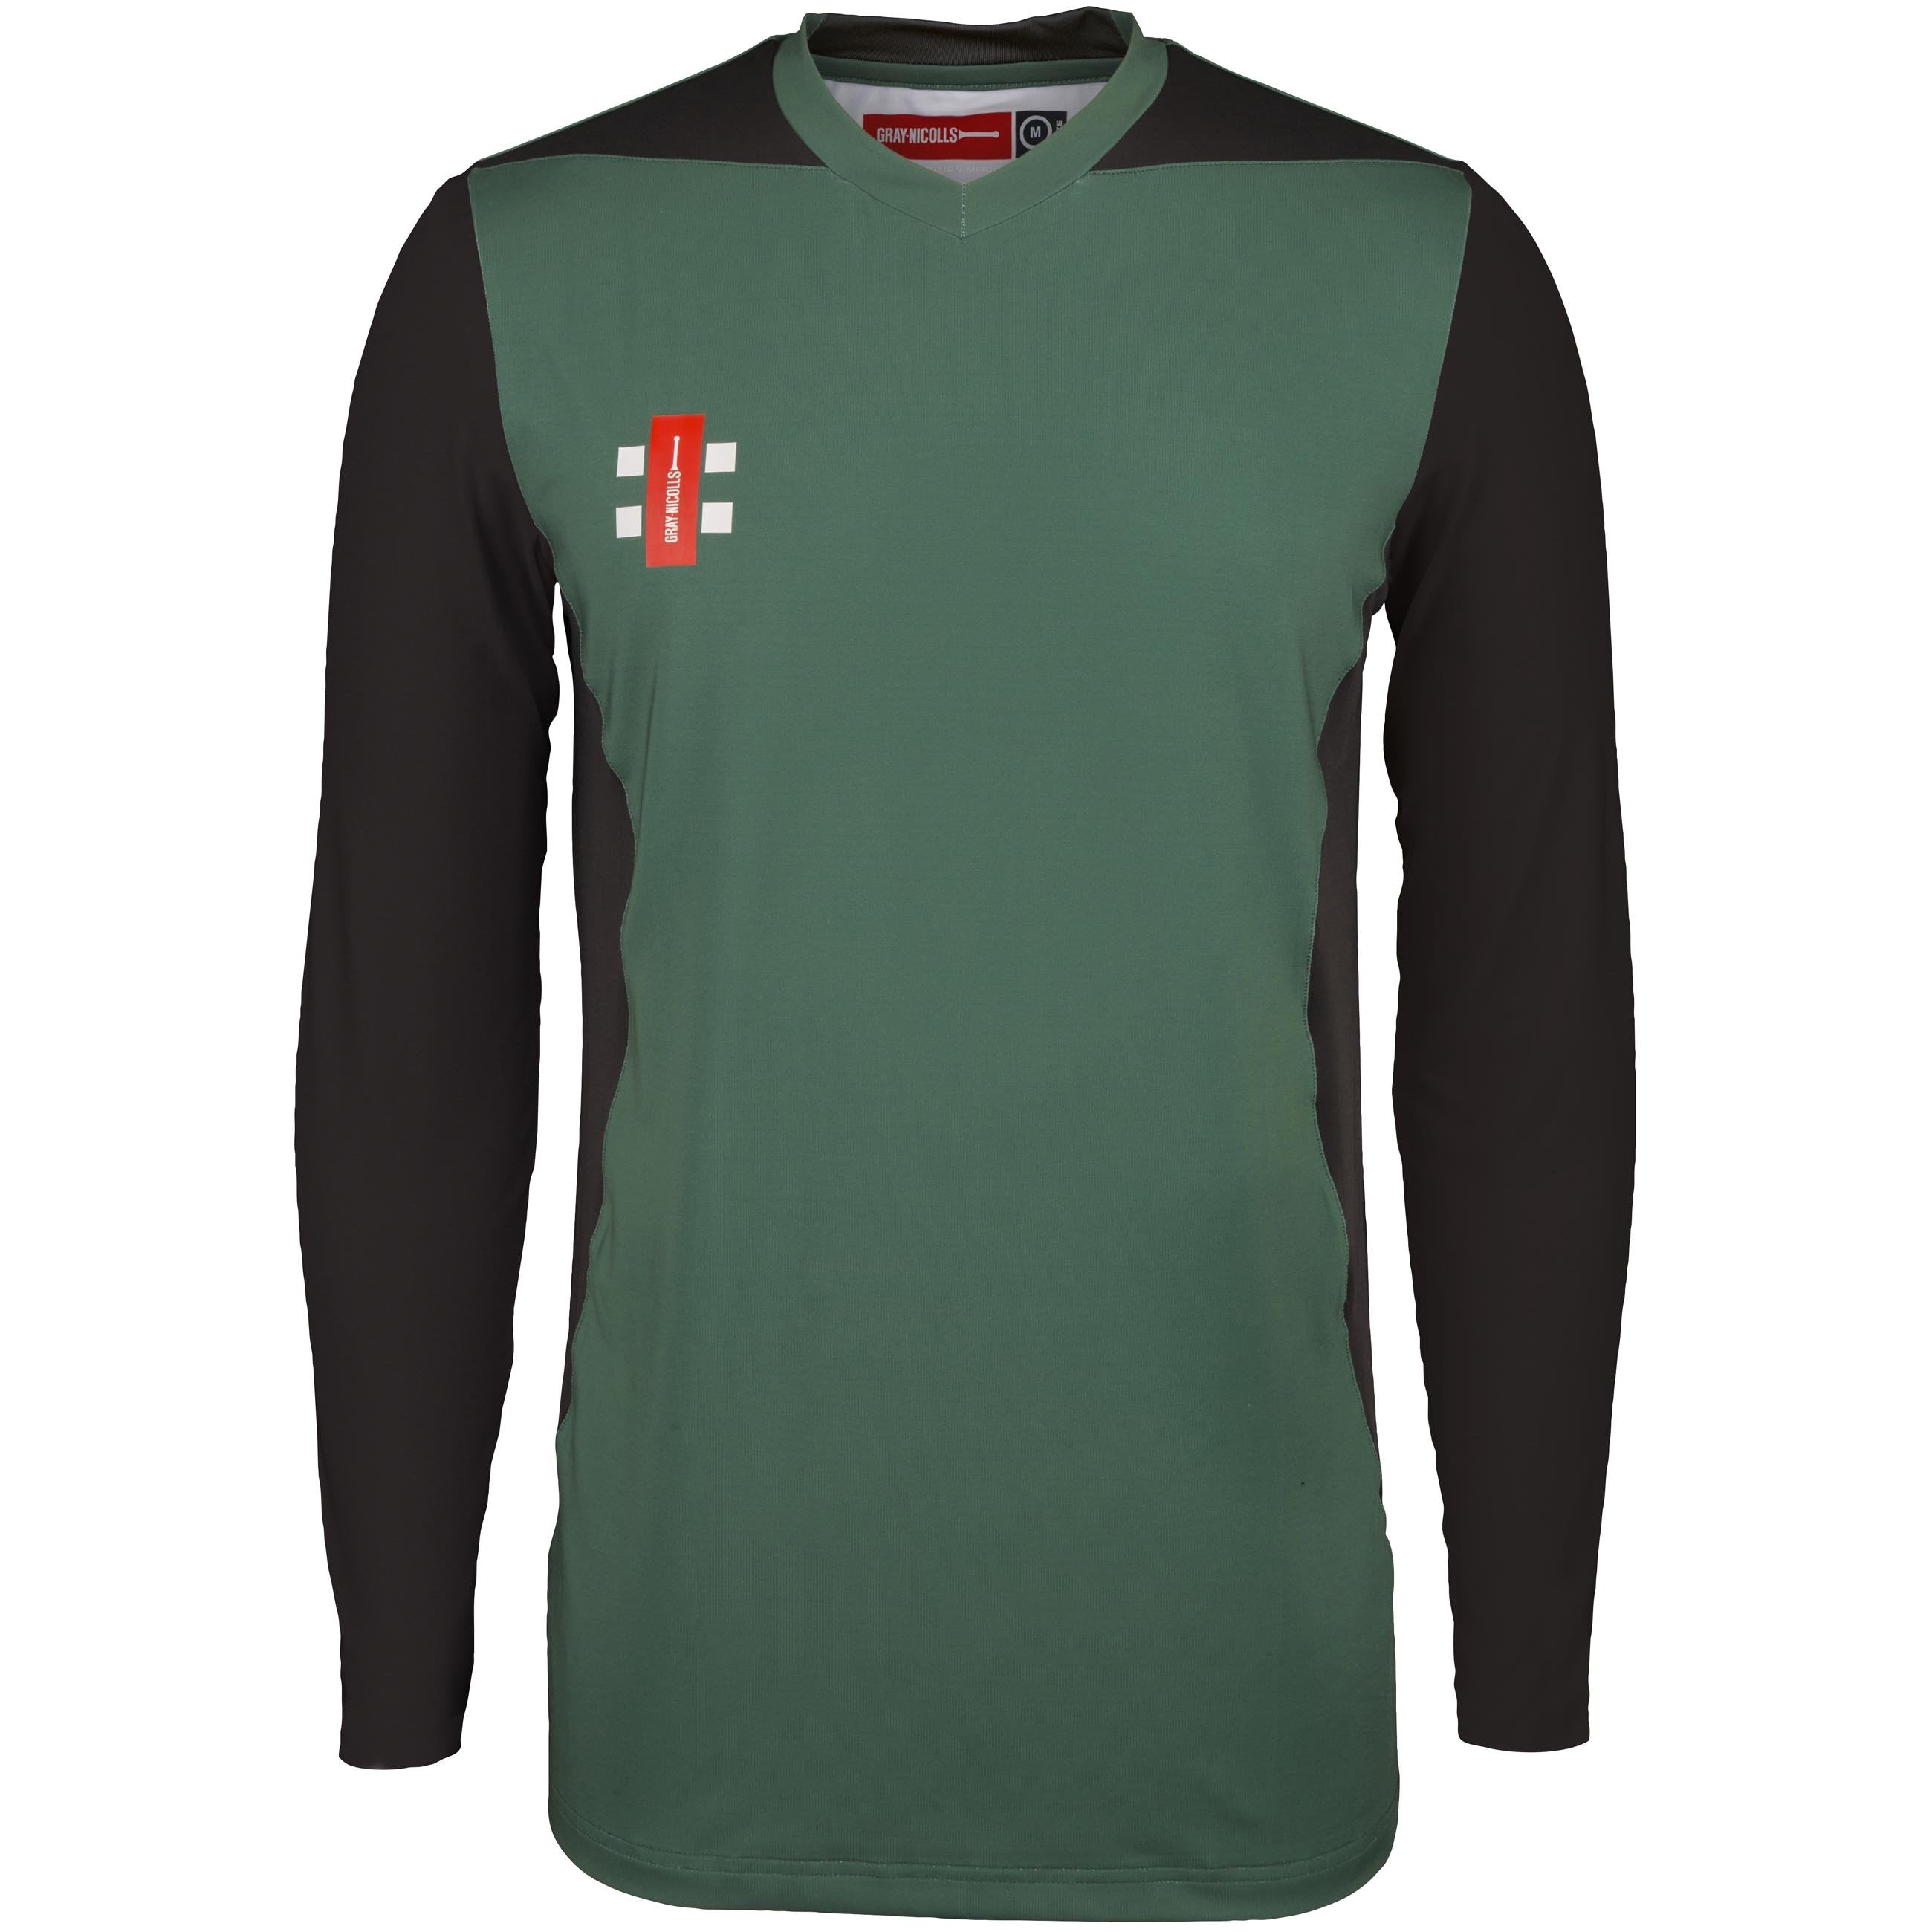 2600 CCFD19 5030905 Shirt T20 Long Sleeve Green & Black, Front